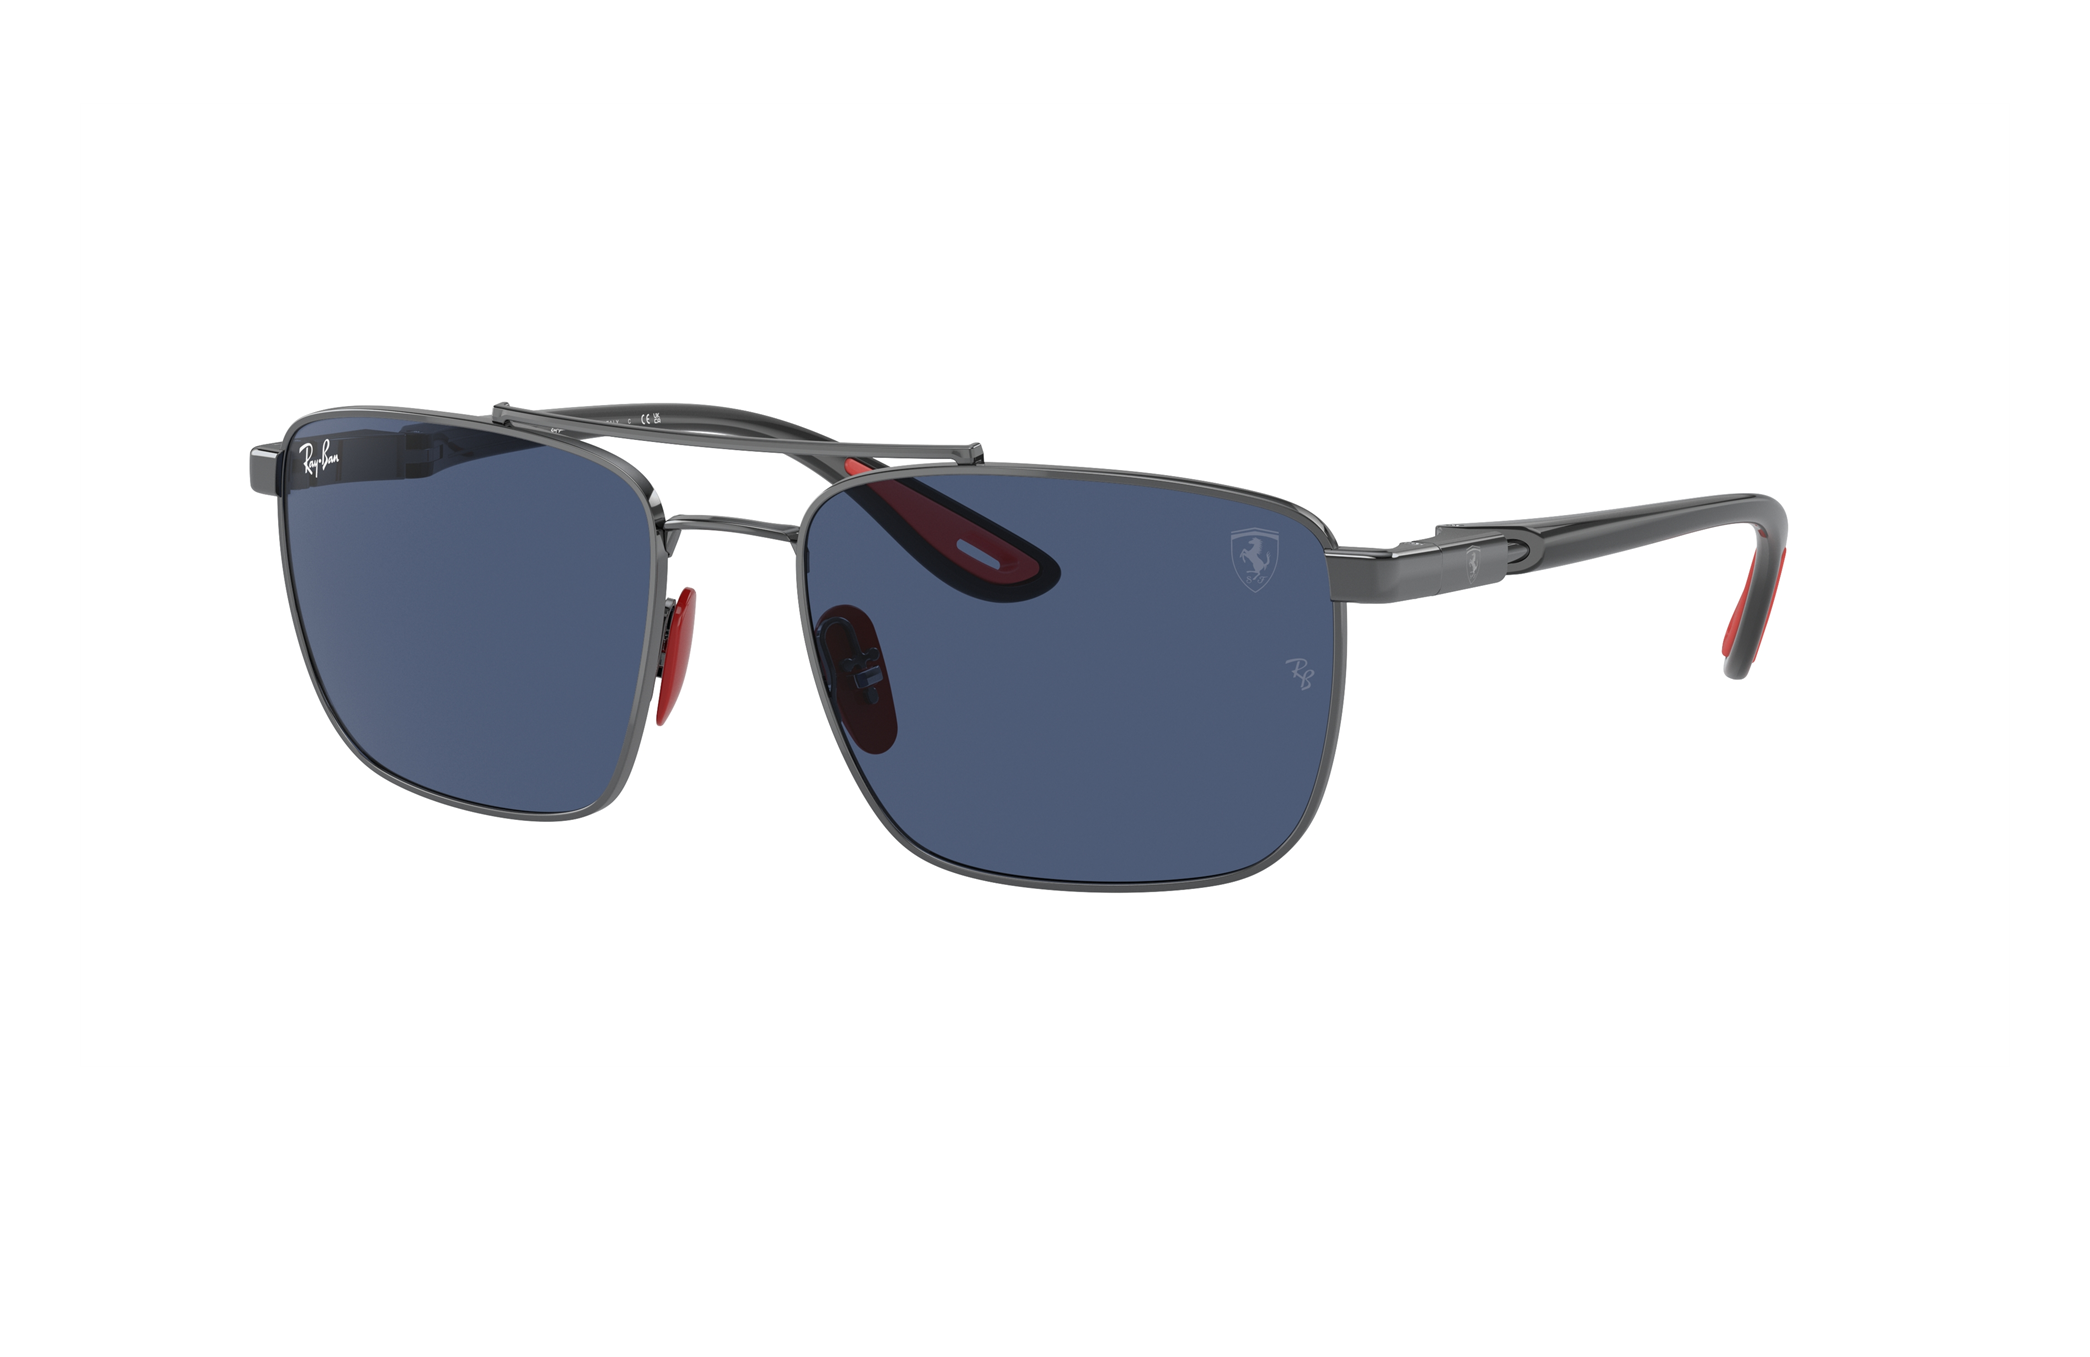 Rb3715m Scuderia Ferrari Collection Sunglasses in Gunmetal and Dark Blue -  RB3715M | Ray-Ban® US